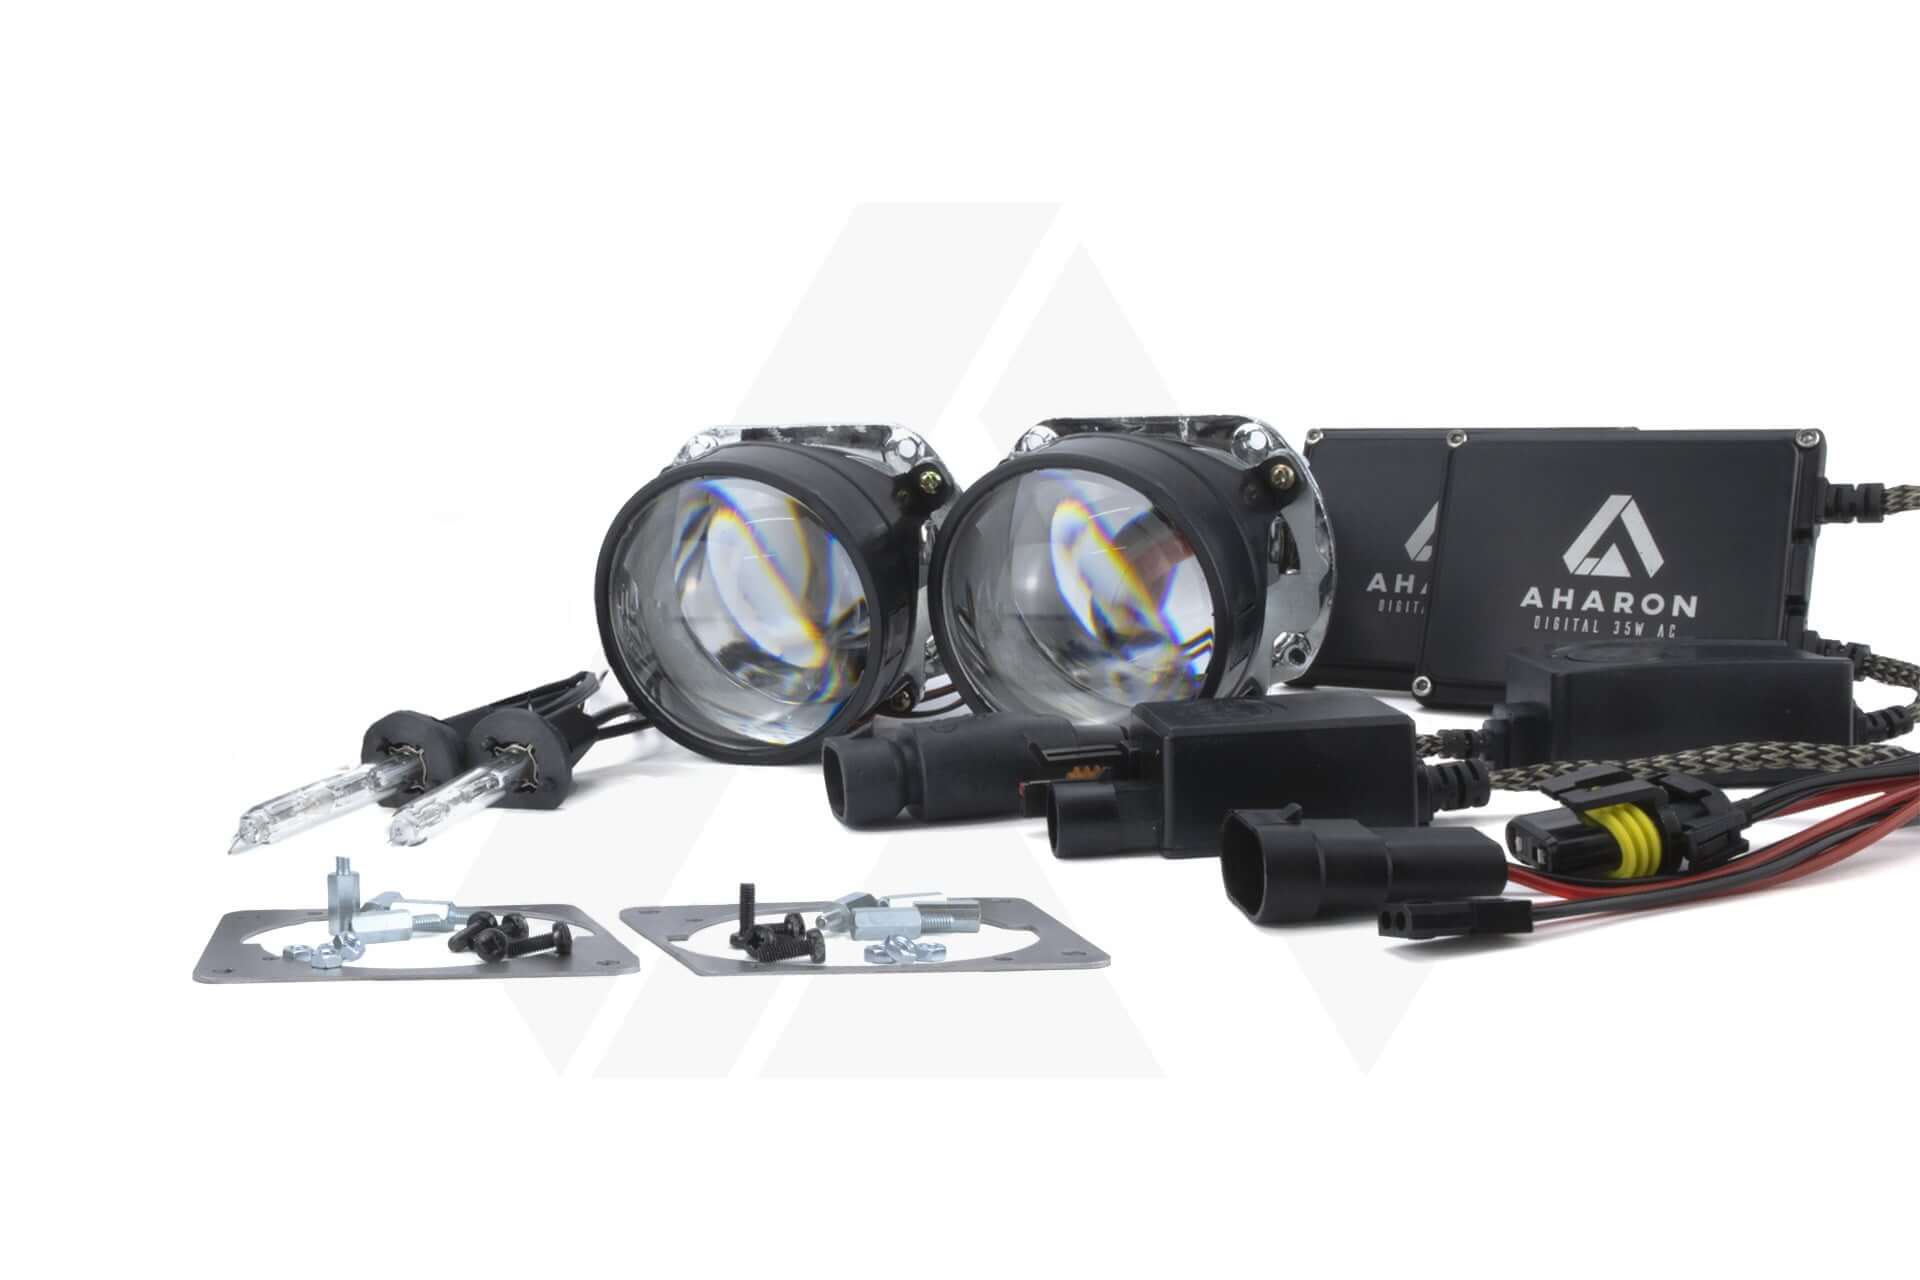 Audi TT 8N 98-06 bi-xenon HID light upgrade kit for halogen projector headlights